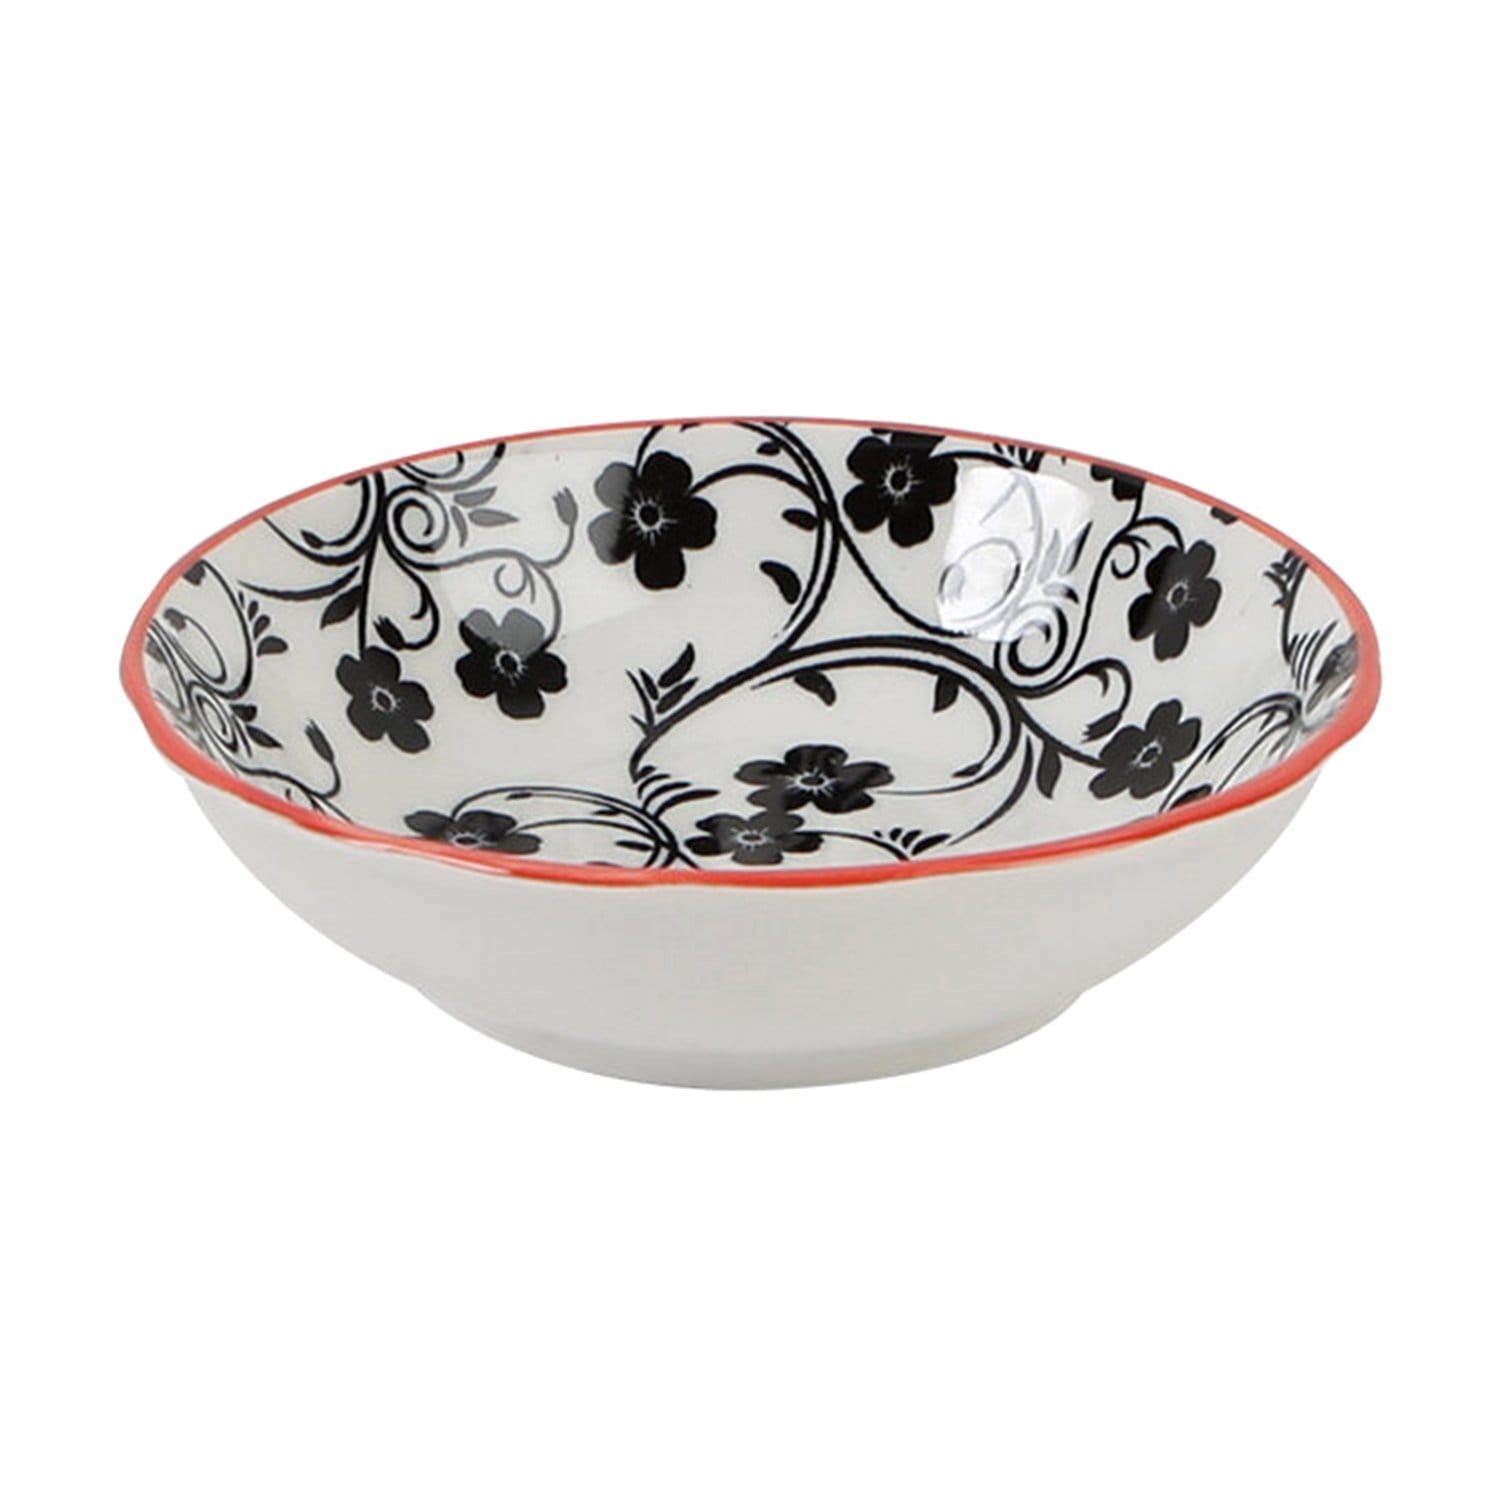 Porland Porselen Mix & Match 9 cm Bowl - Black and White - 04STY003612 - Jashanmal Home